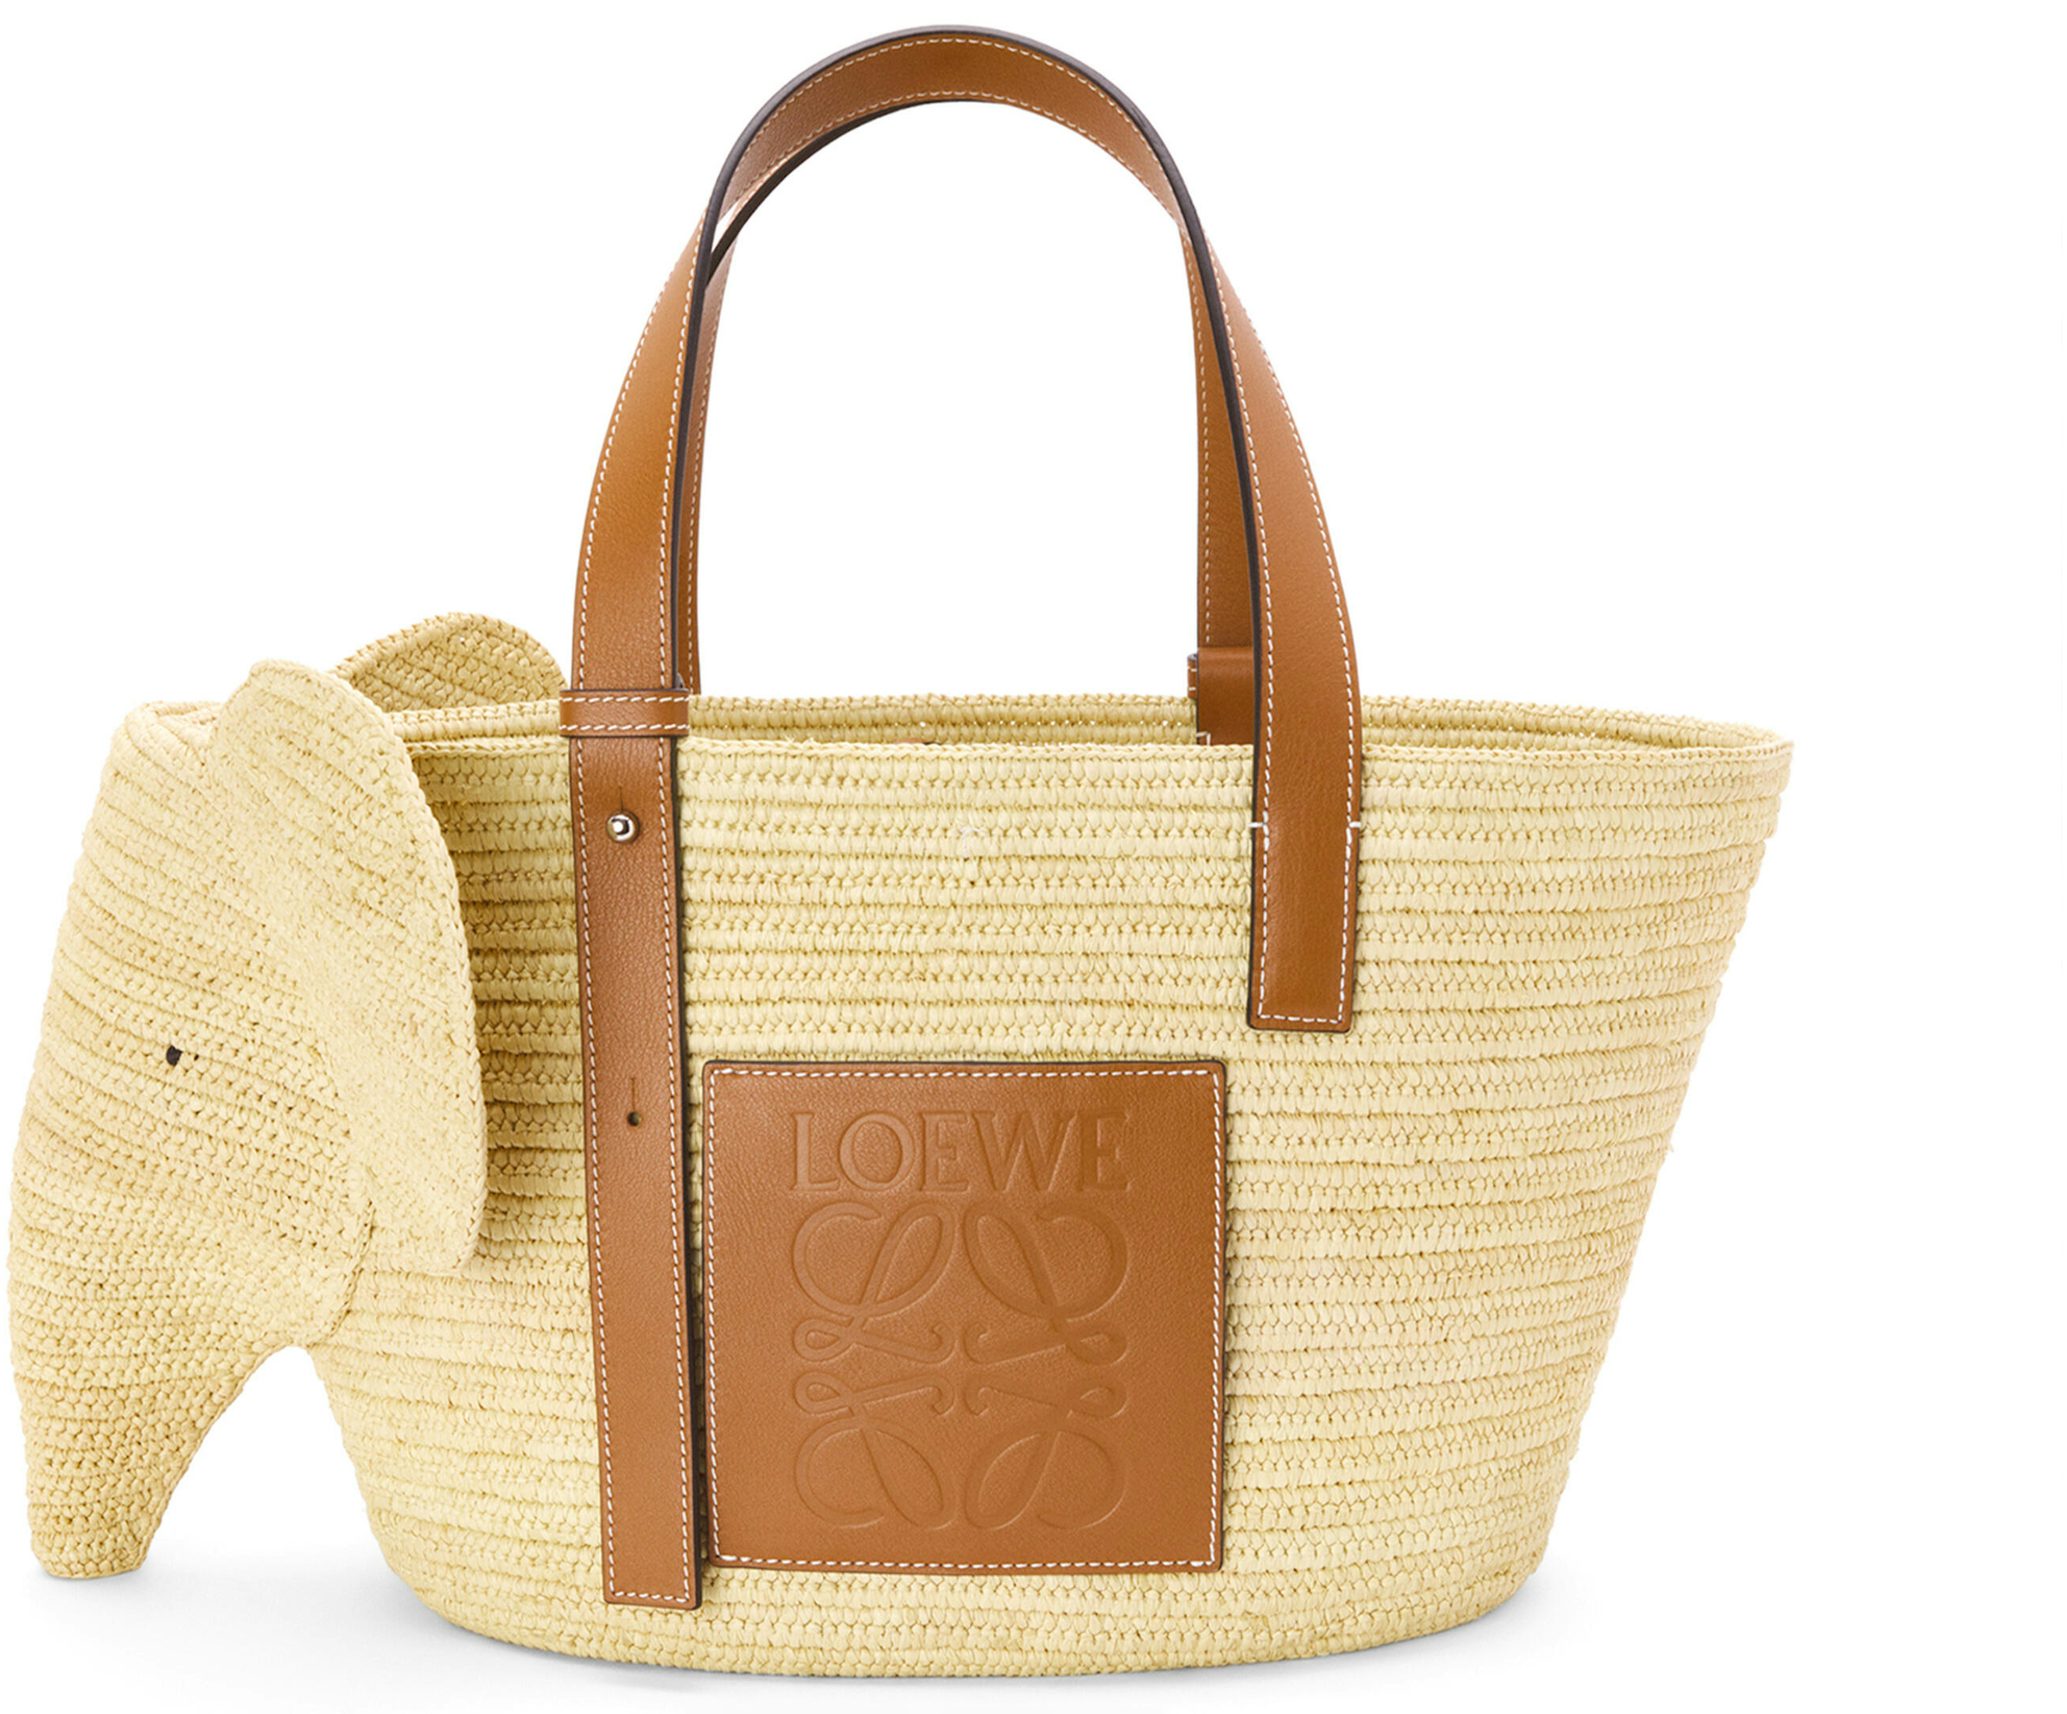 Loewe - Women's Mini Anagram Tote Bag in Jacquard and Calfskin - Natural - Leather